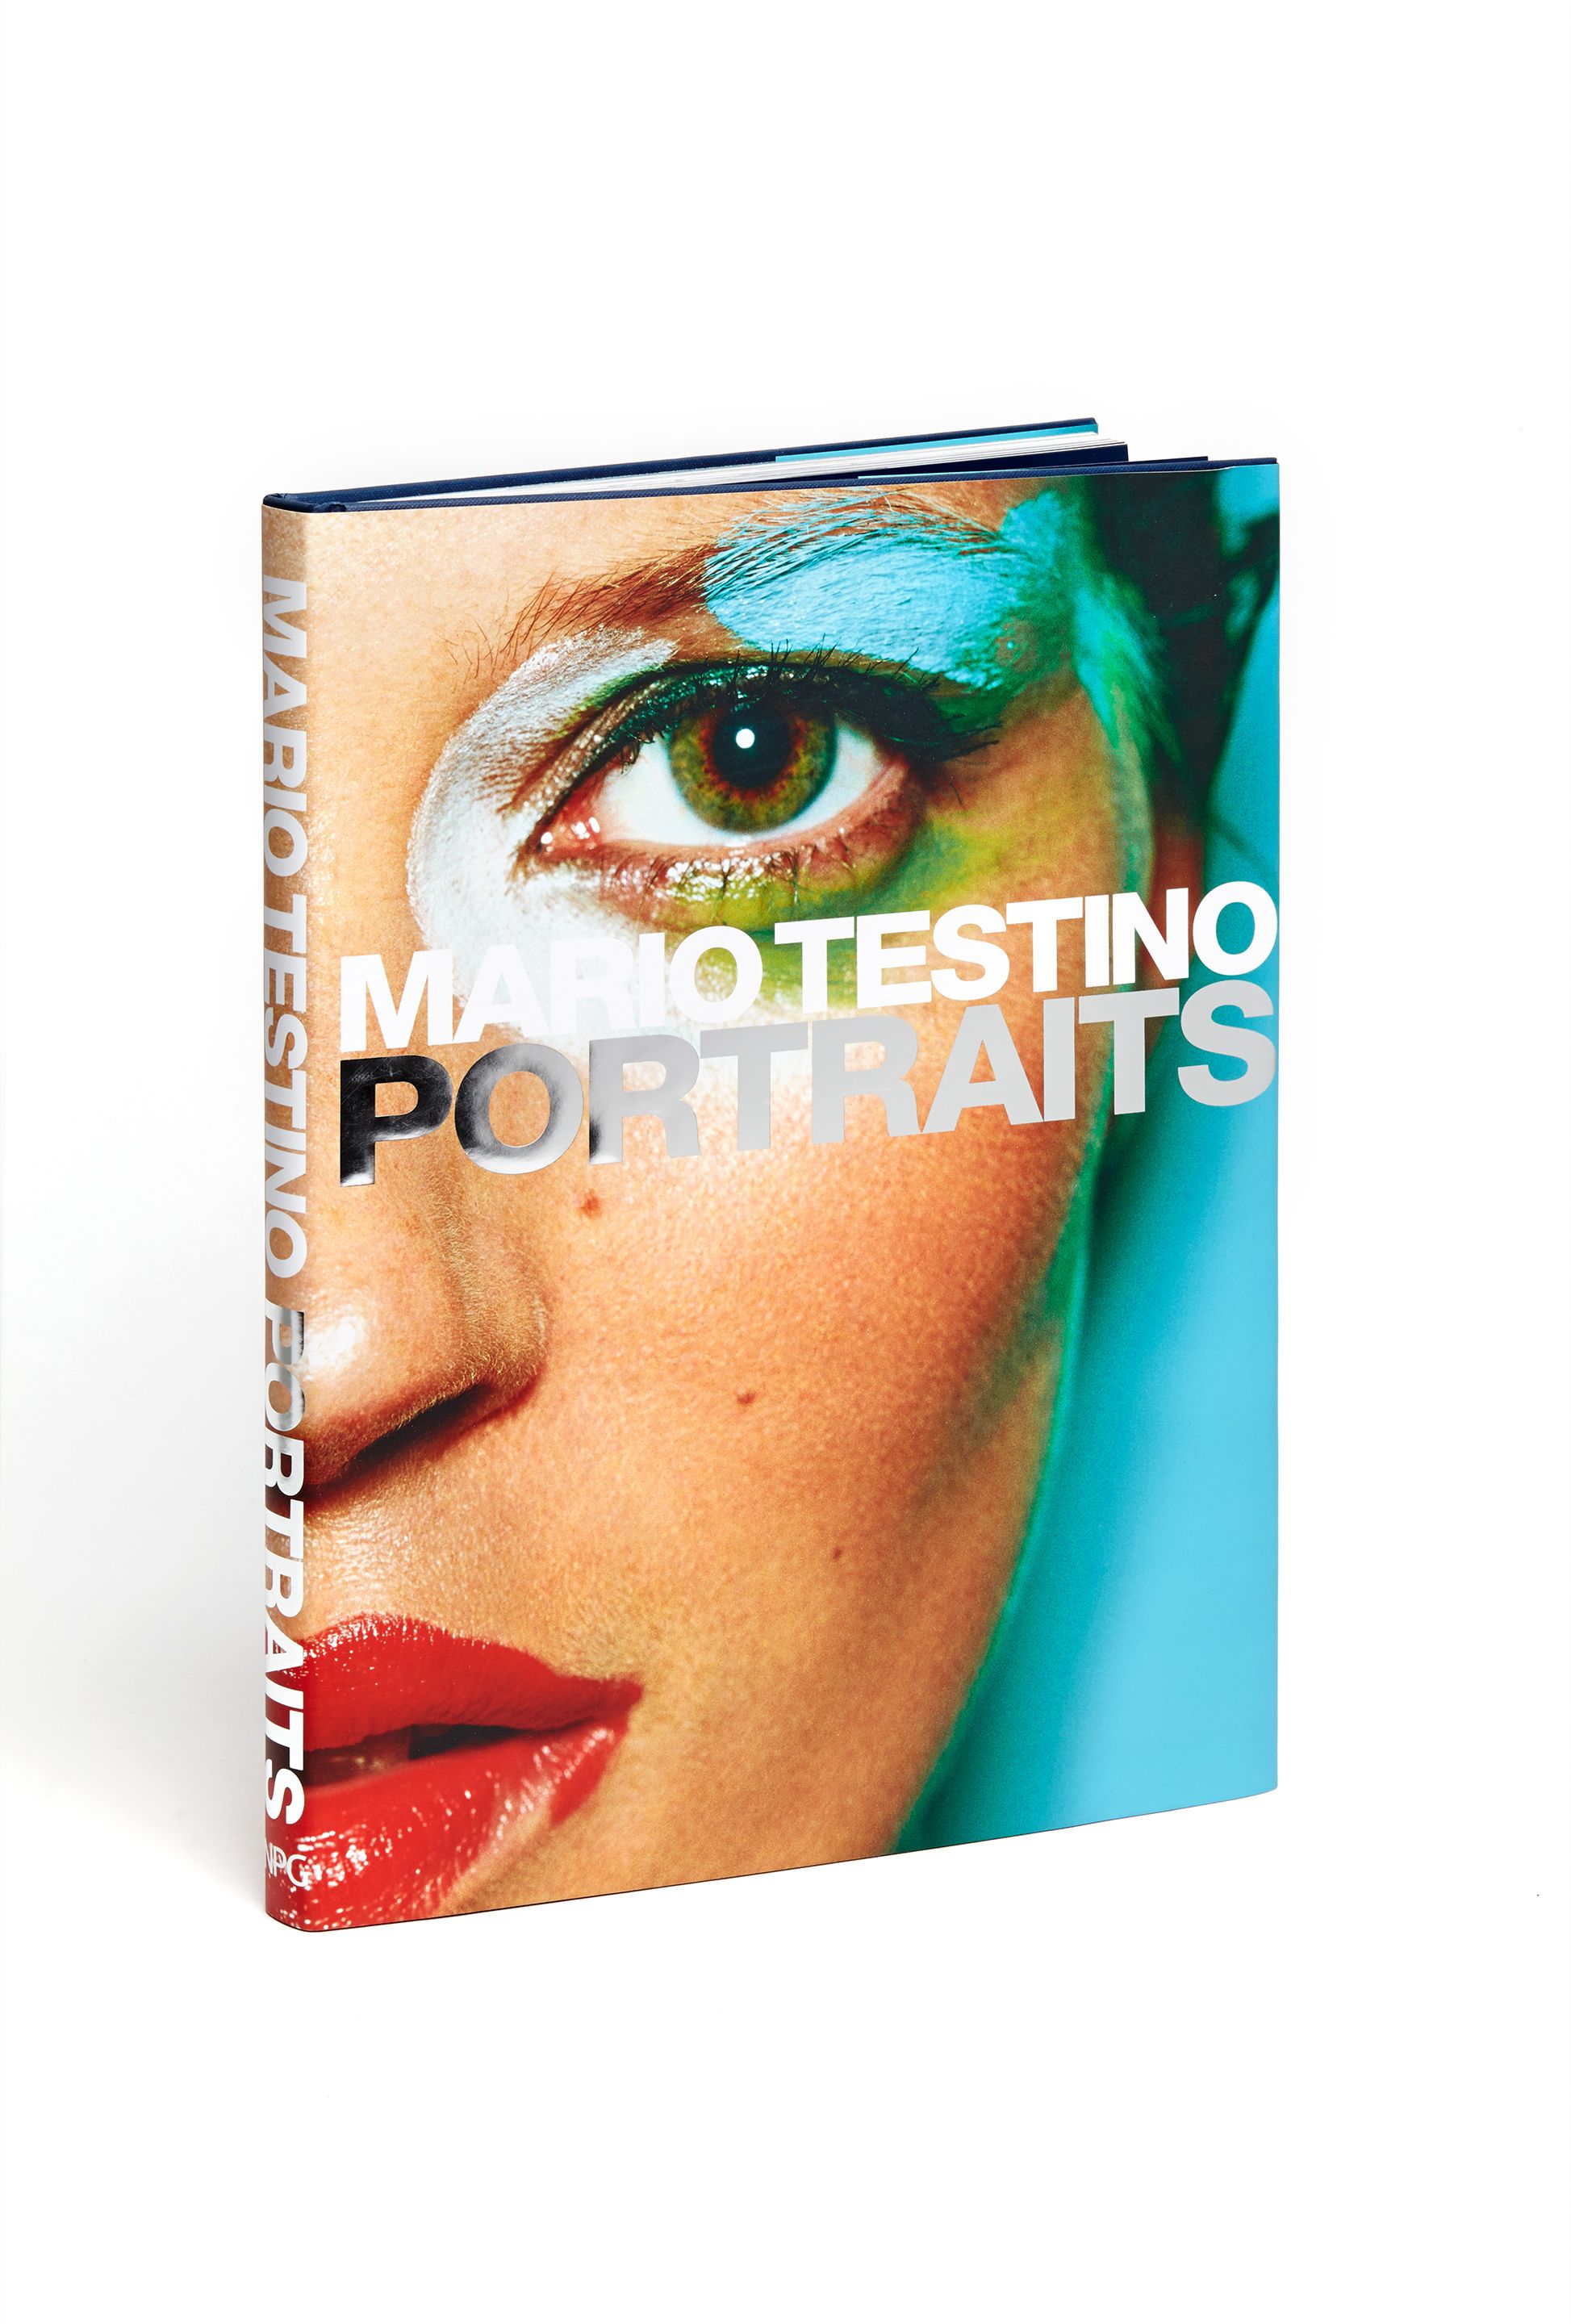 Cover of Potraits by Mario Testino